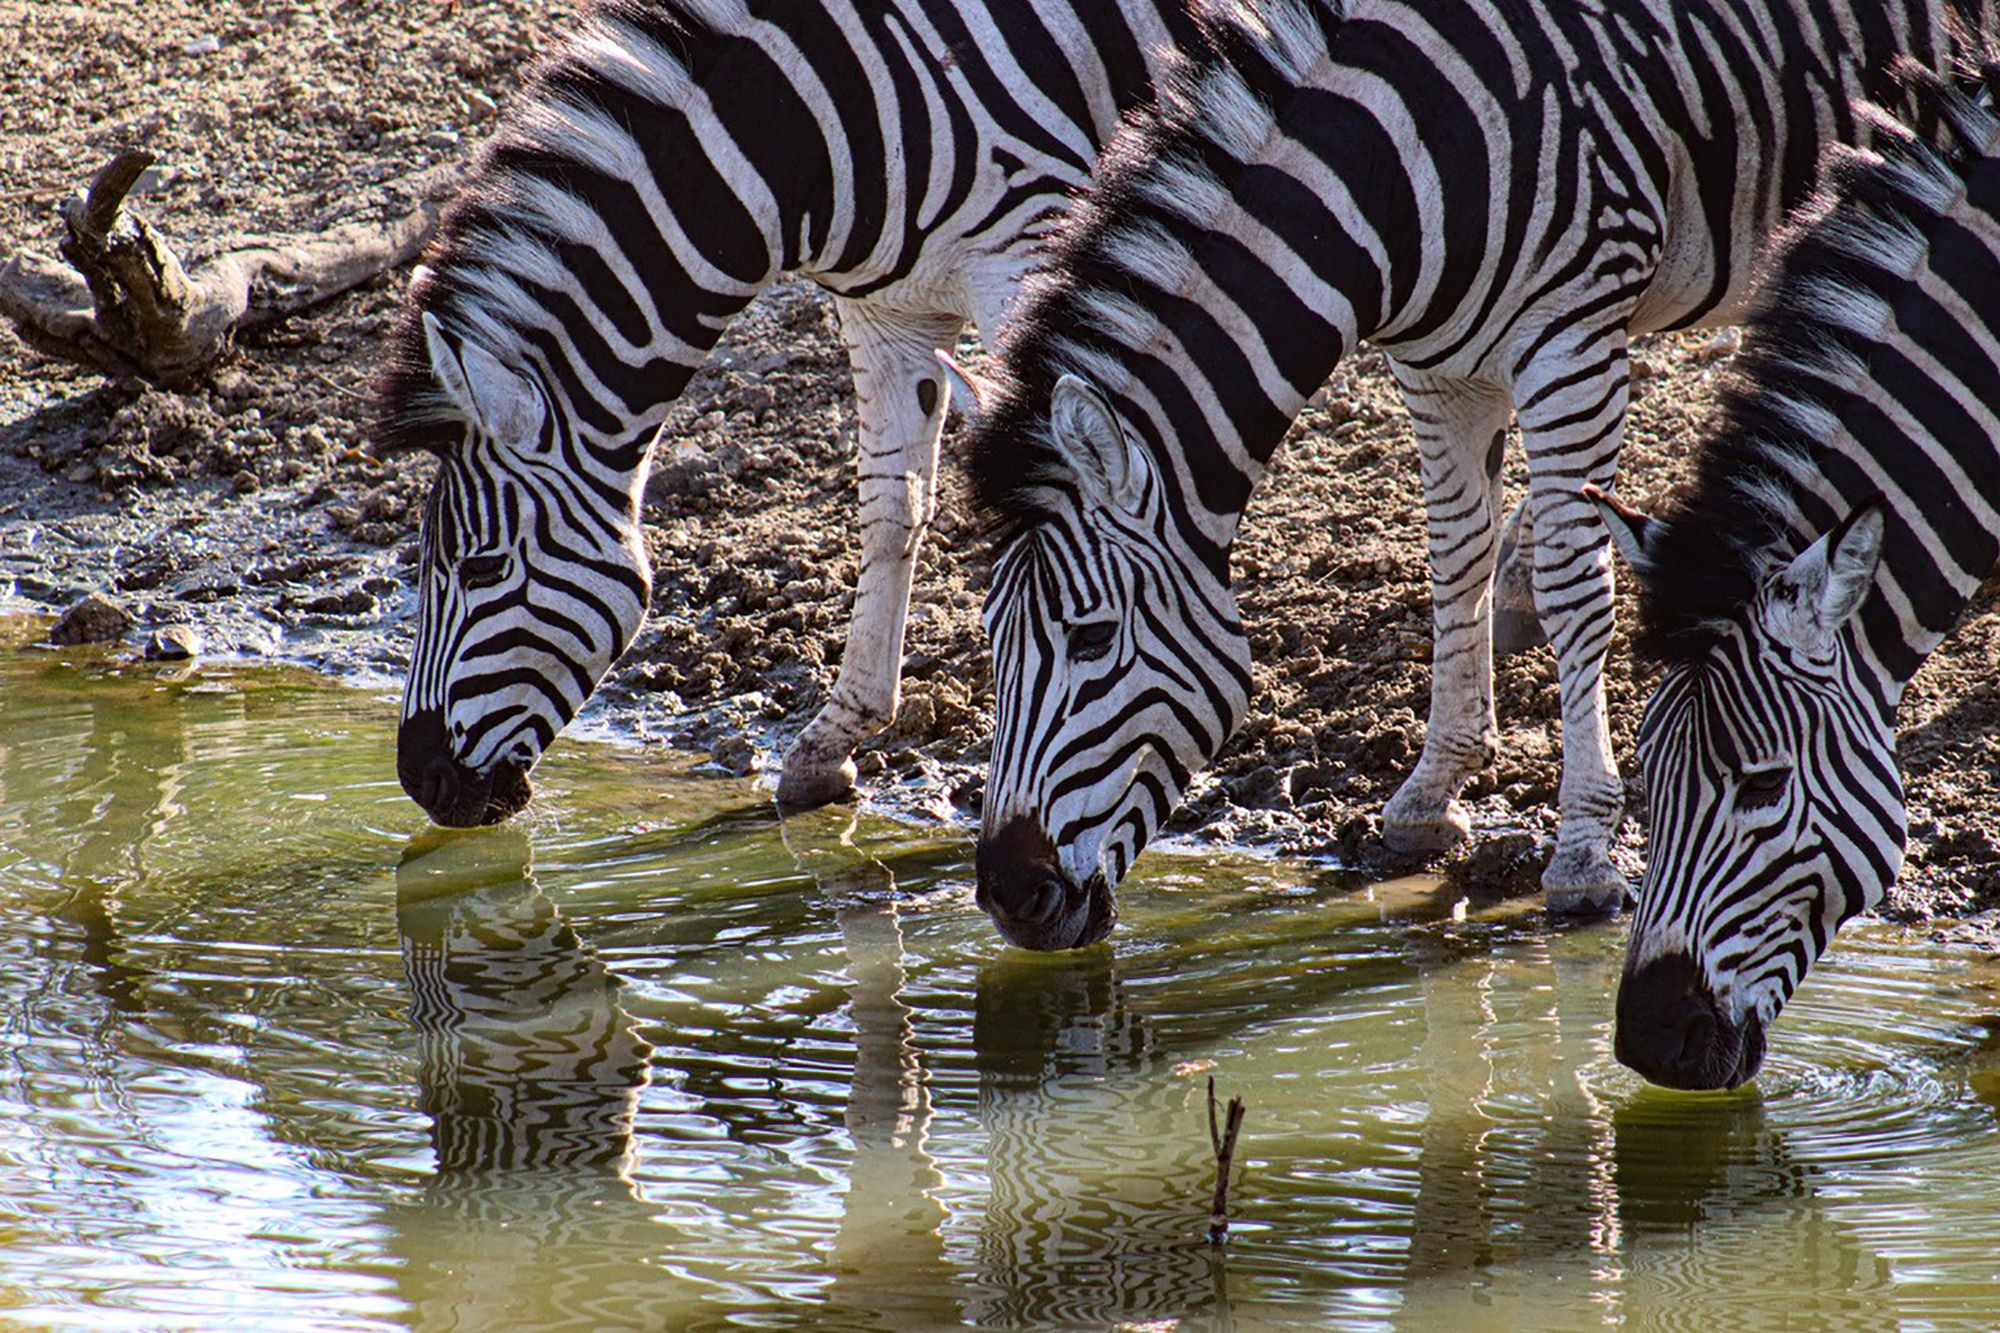 Zebra' tribal bodypaint cuts fly bites 10-fold: study